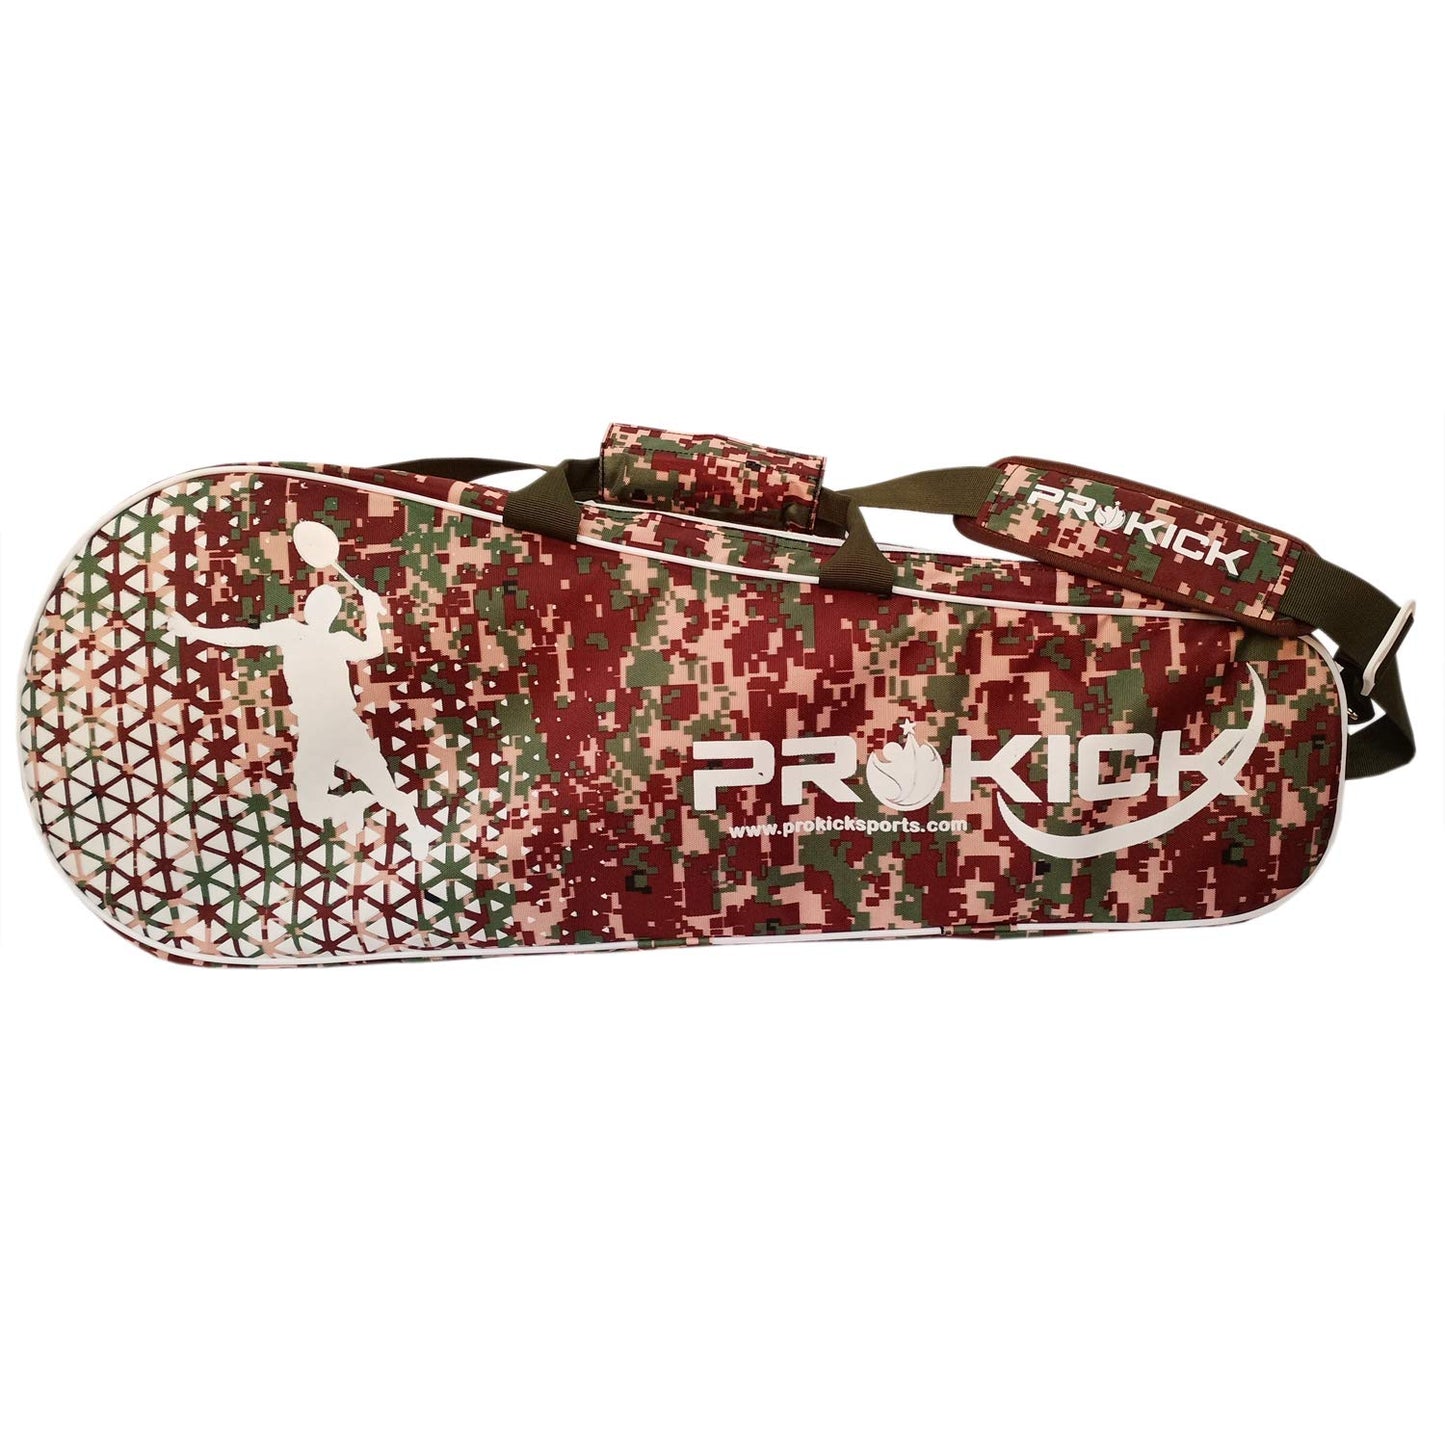 Prokick Badminton Kitbag with Double Zipper Compartment - Brown Camo Fusion - Best Price online Prokicksports.com